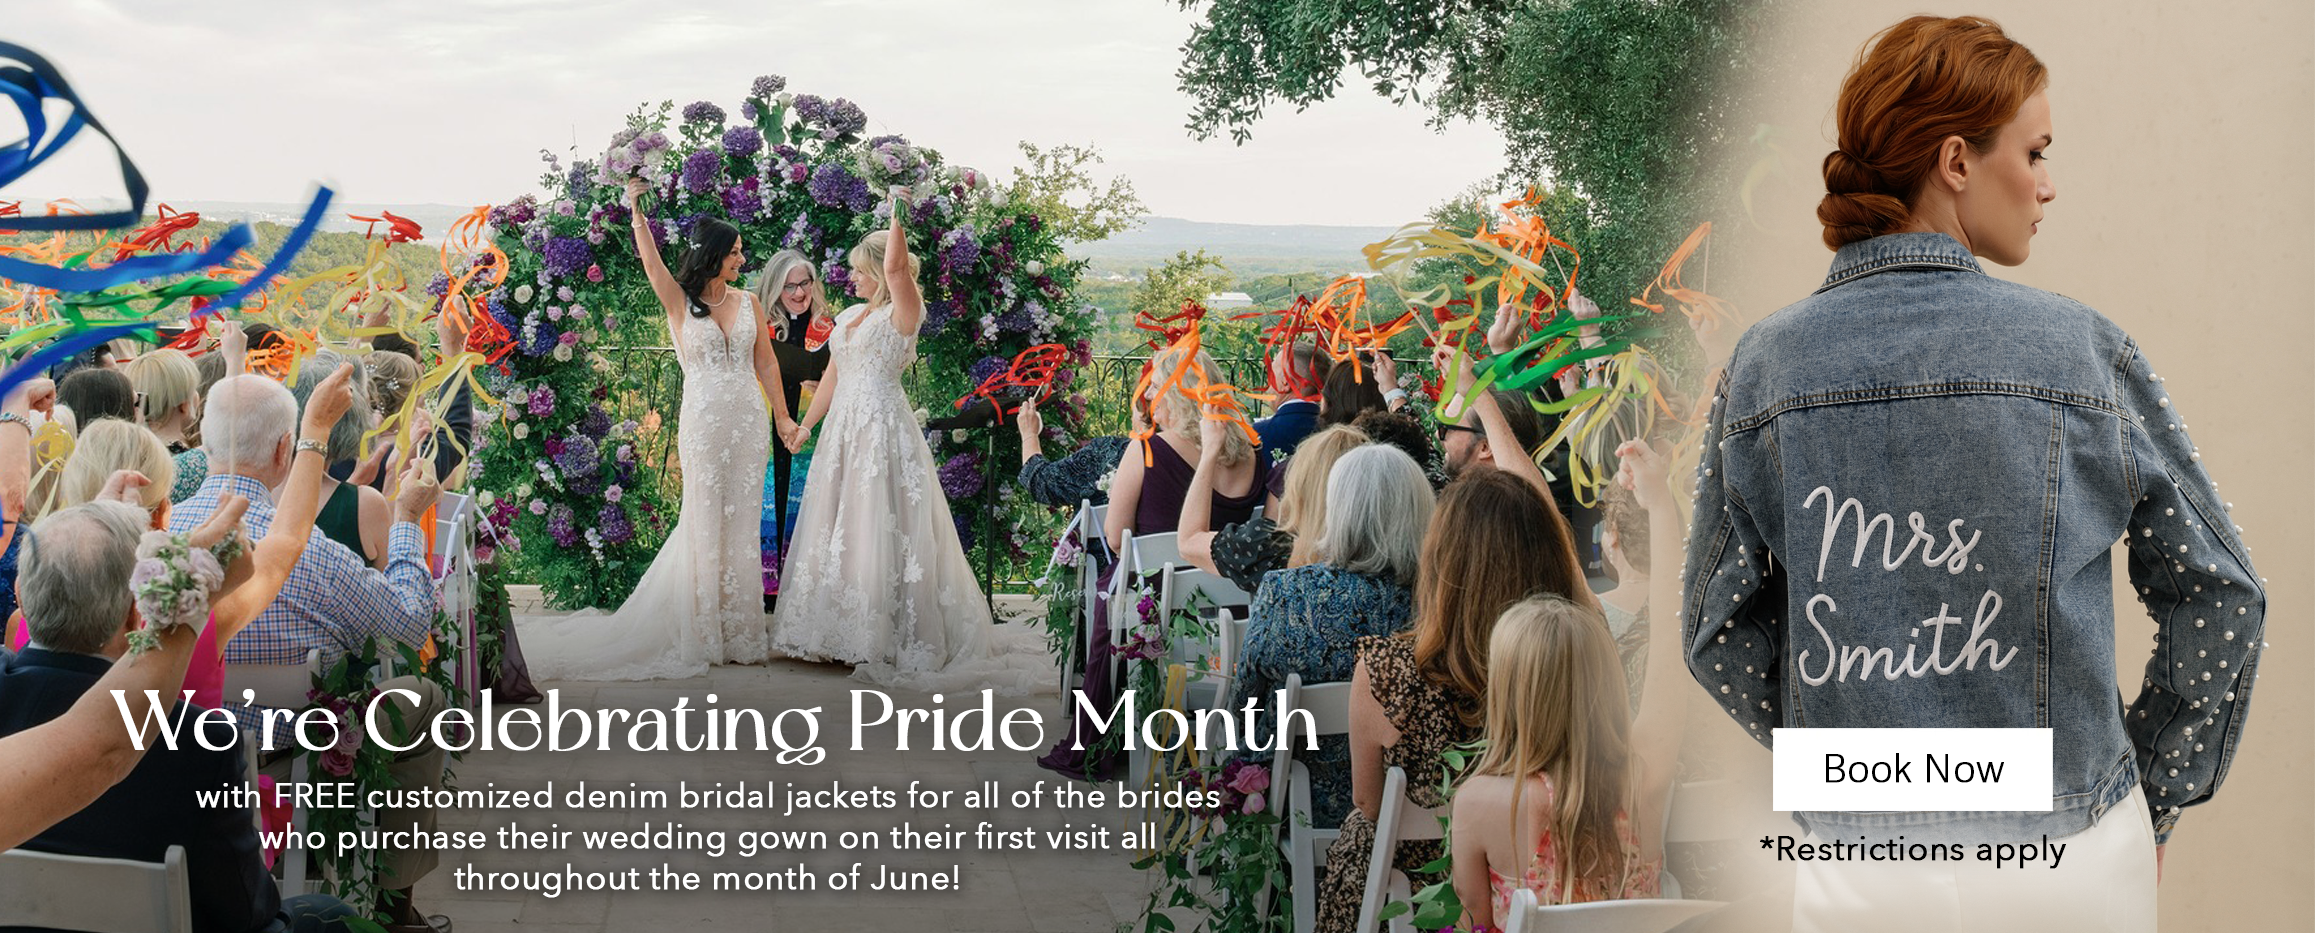 We're Celebrating Pride Month